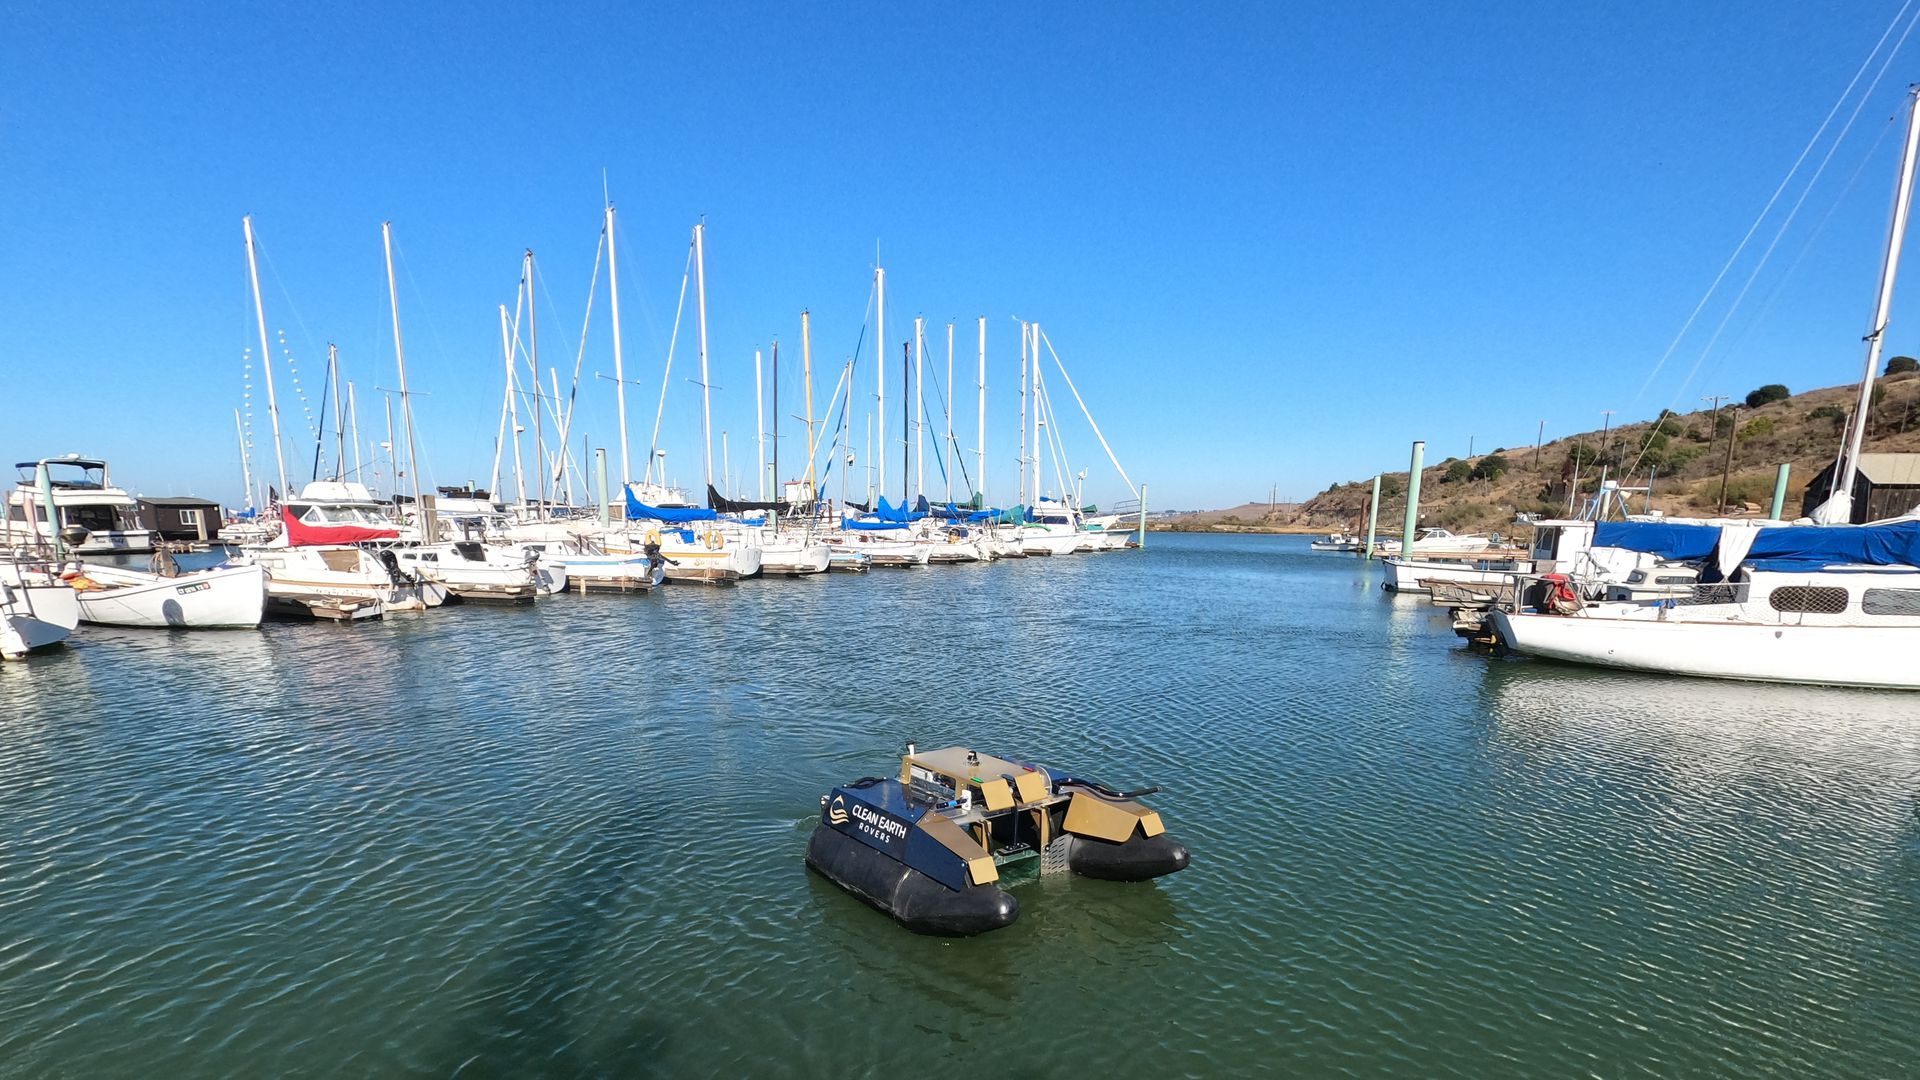 The Plastics Piranha in the water at Point San Pablo Harbor.